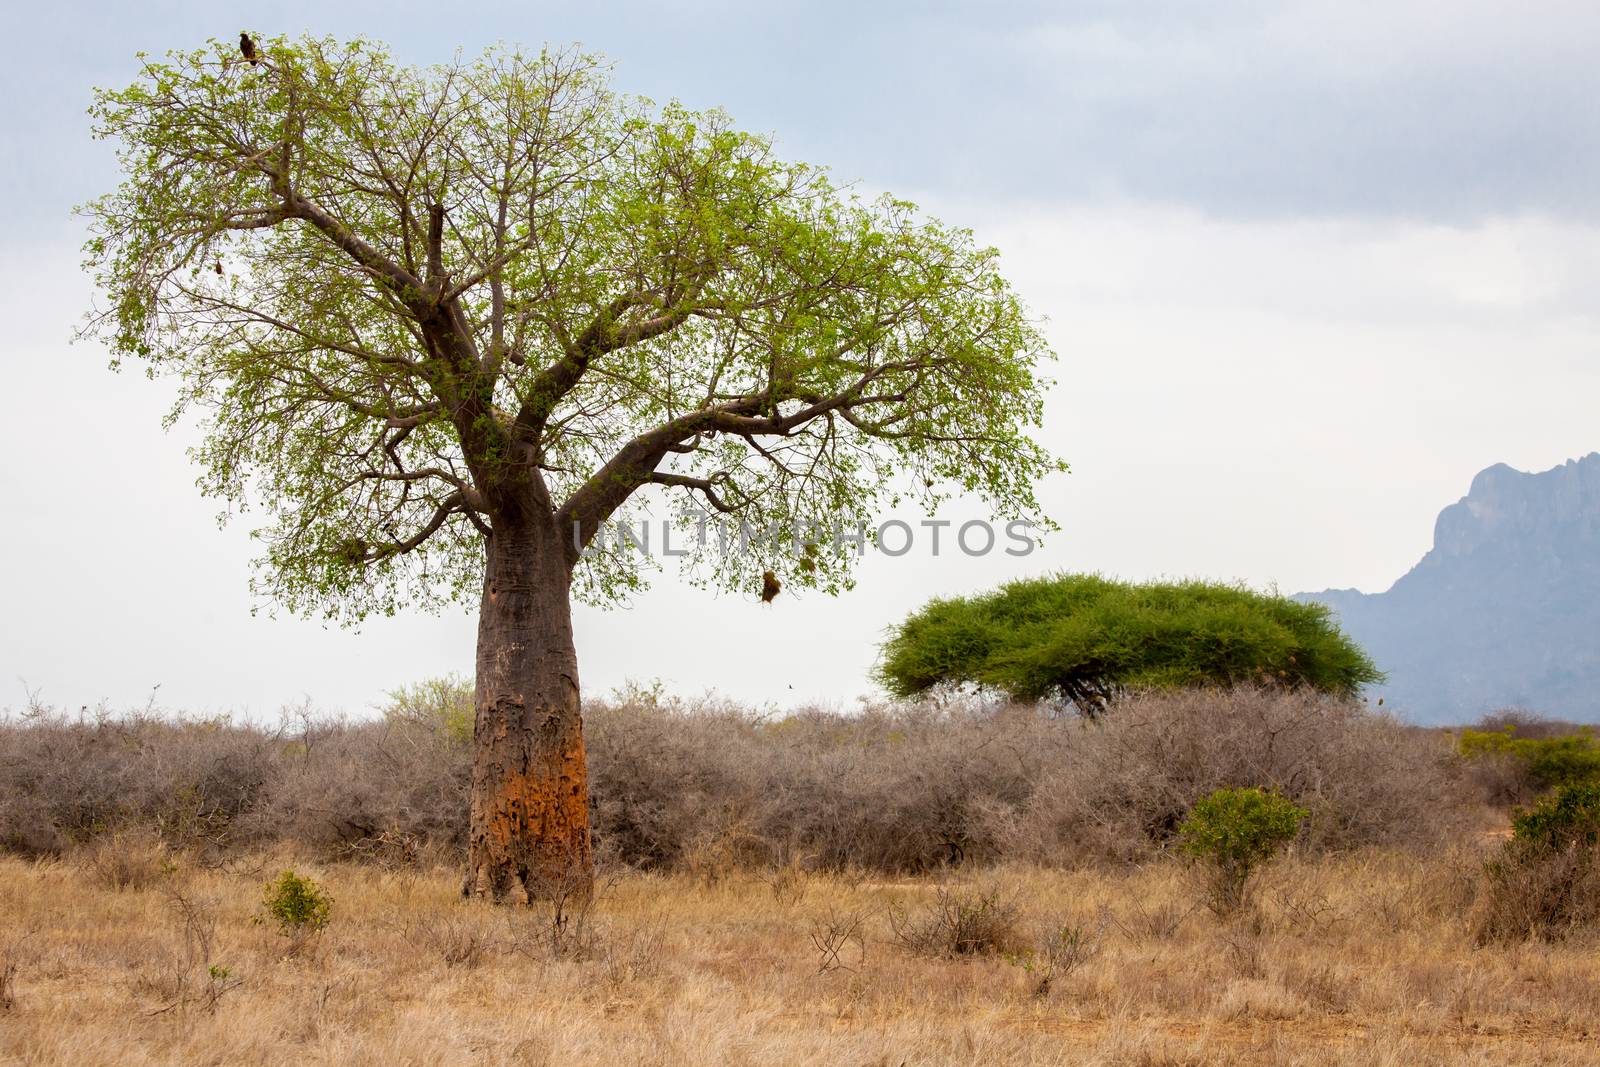 Landscape in Kenya with big baobab by 25ehaag6